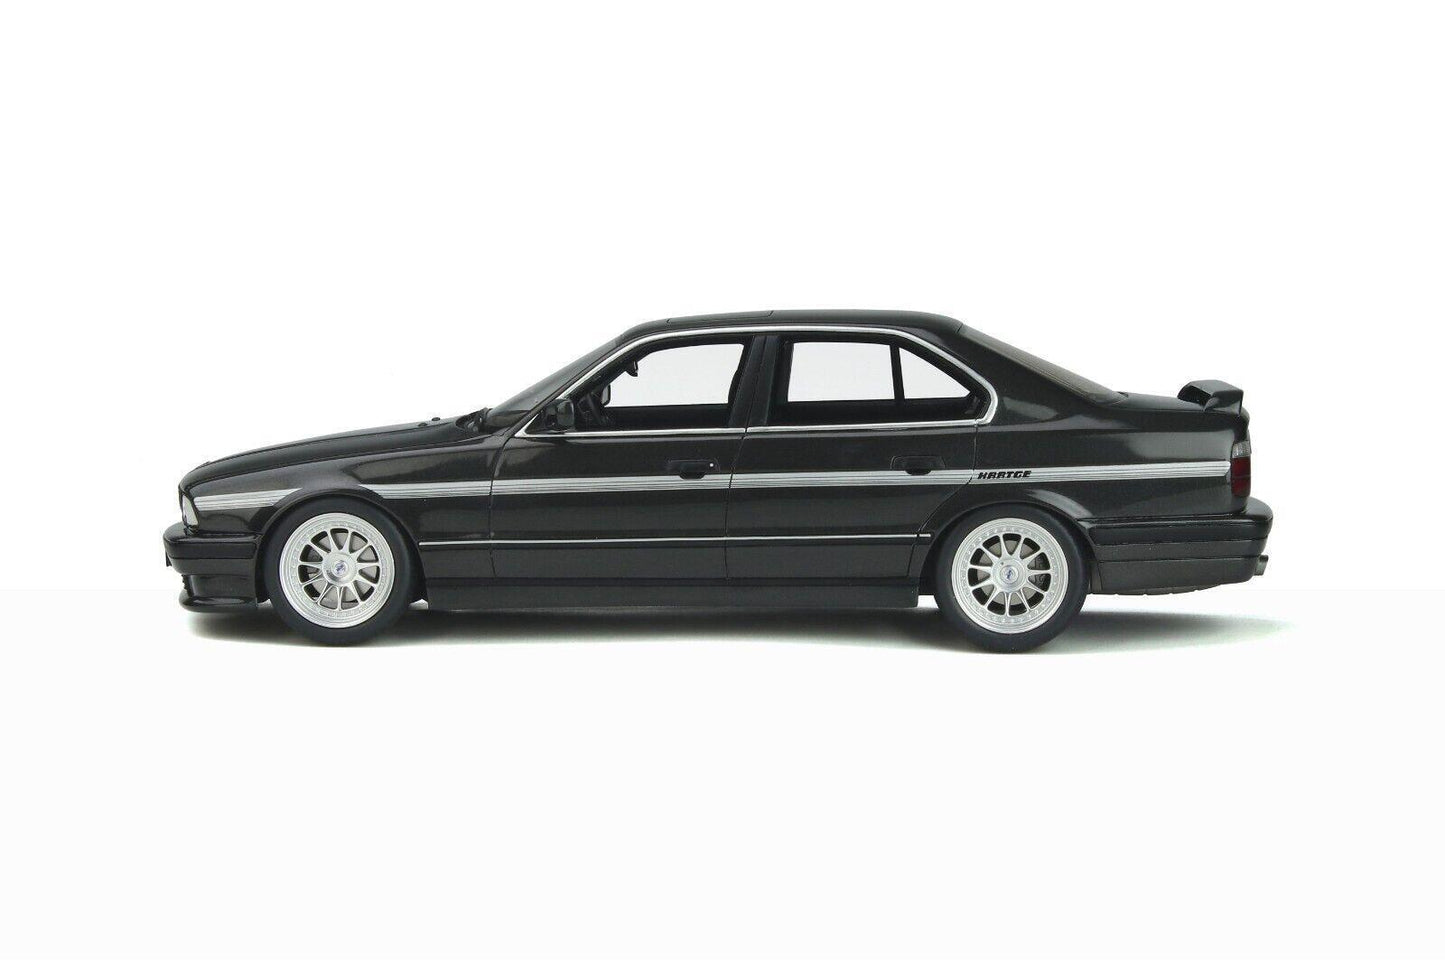 Otto 1989 BMW M5 E34 Hartge H5 V12 Diamond Black Metallic 1:18